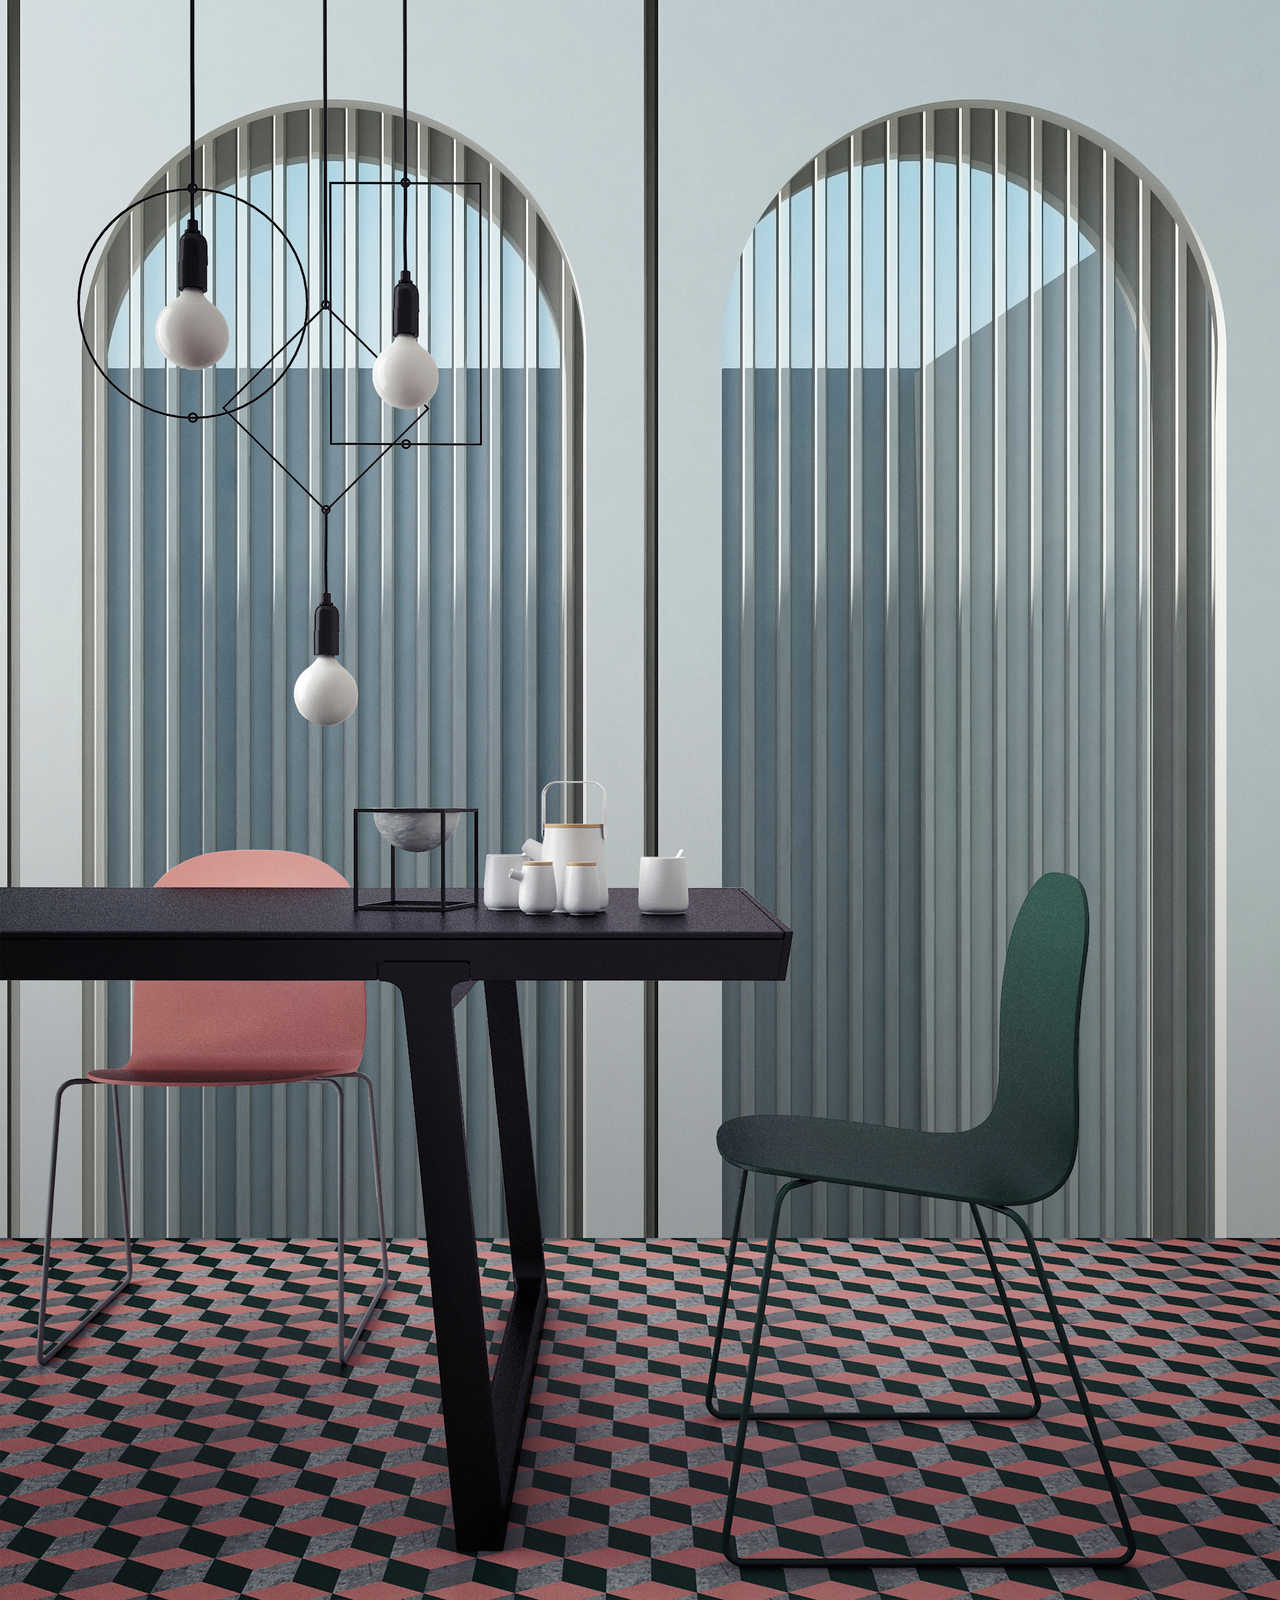             Escape Room 1 - Moderne Architectuur Blauw & Grijs Behang
        